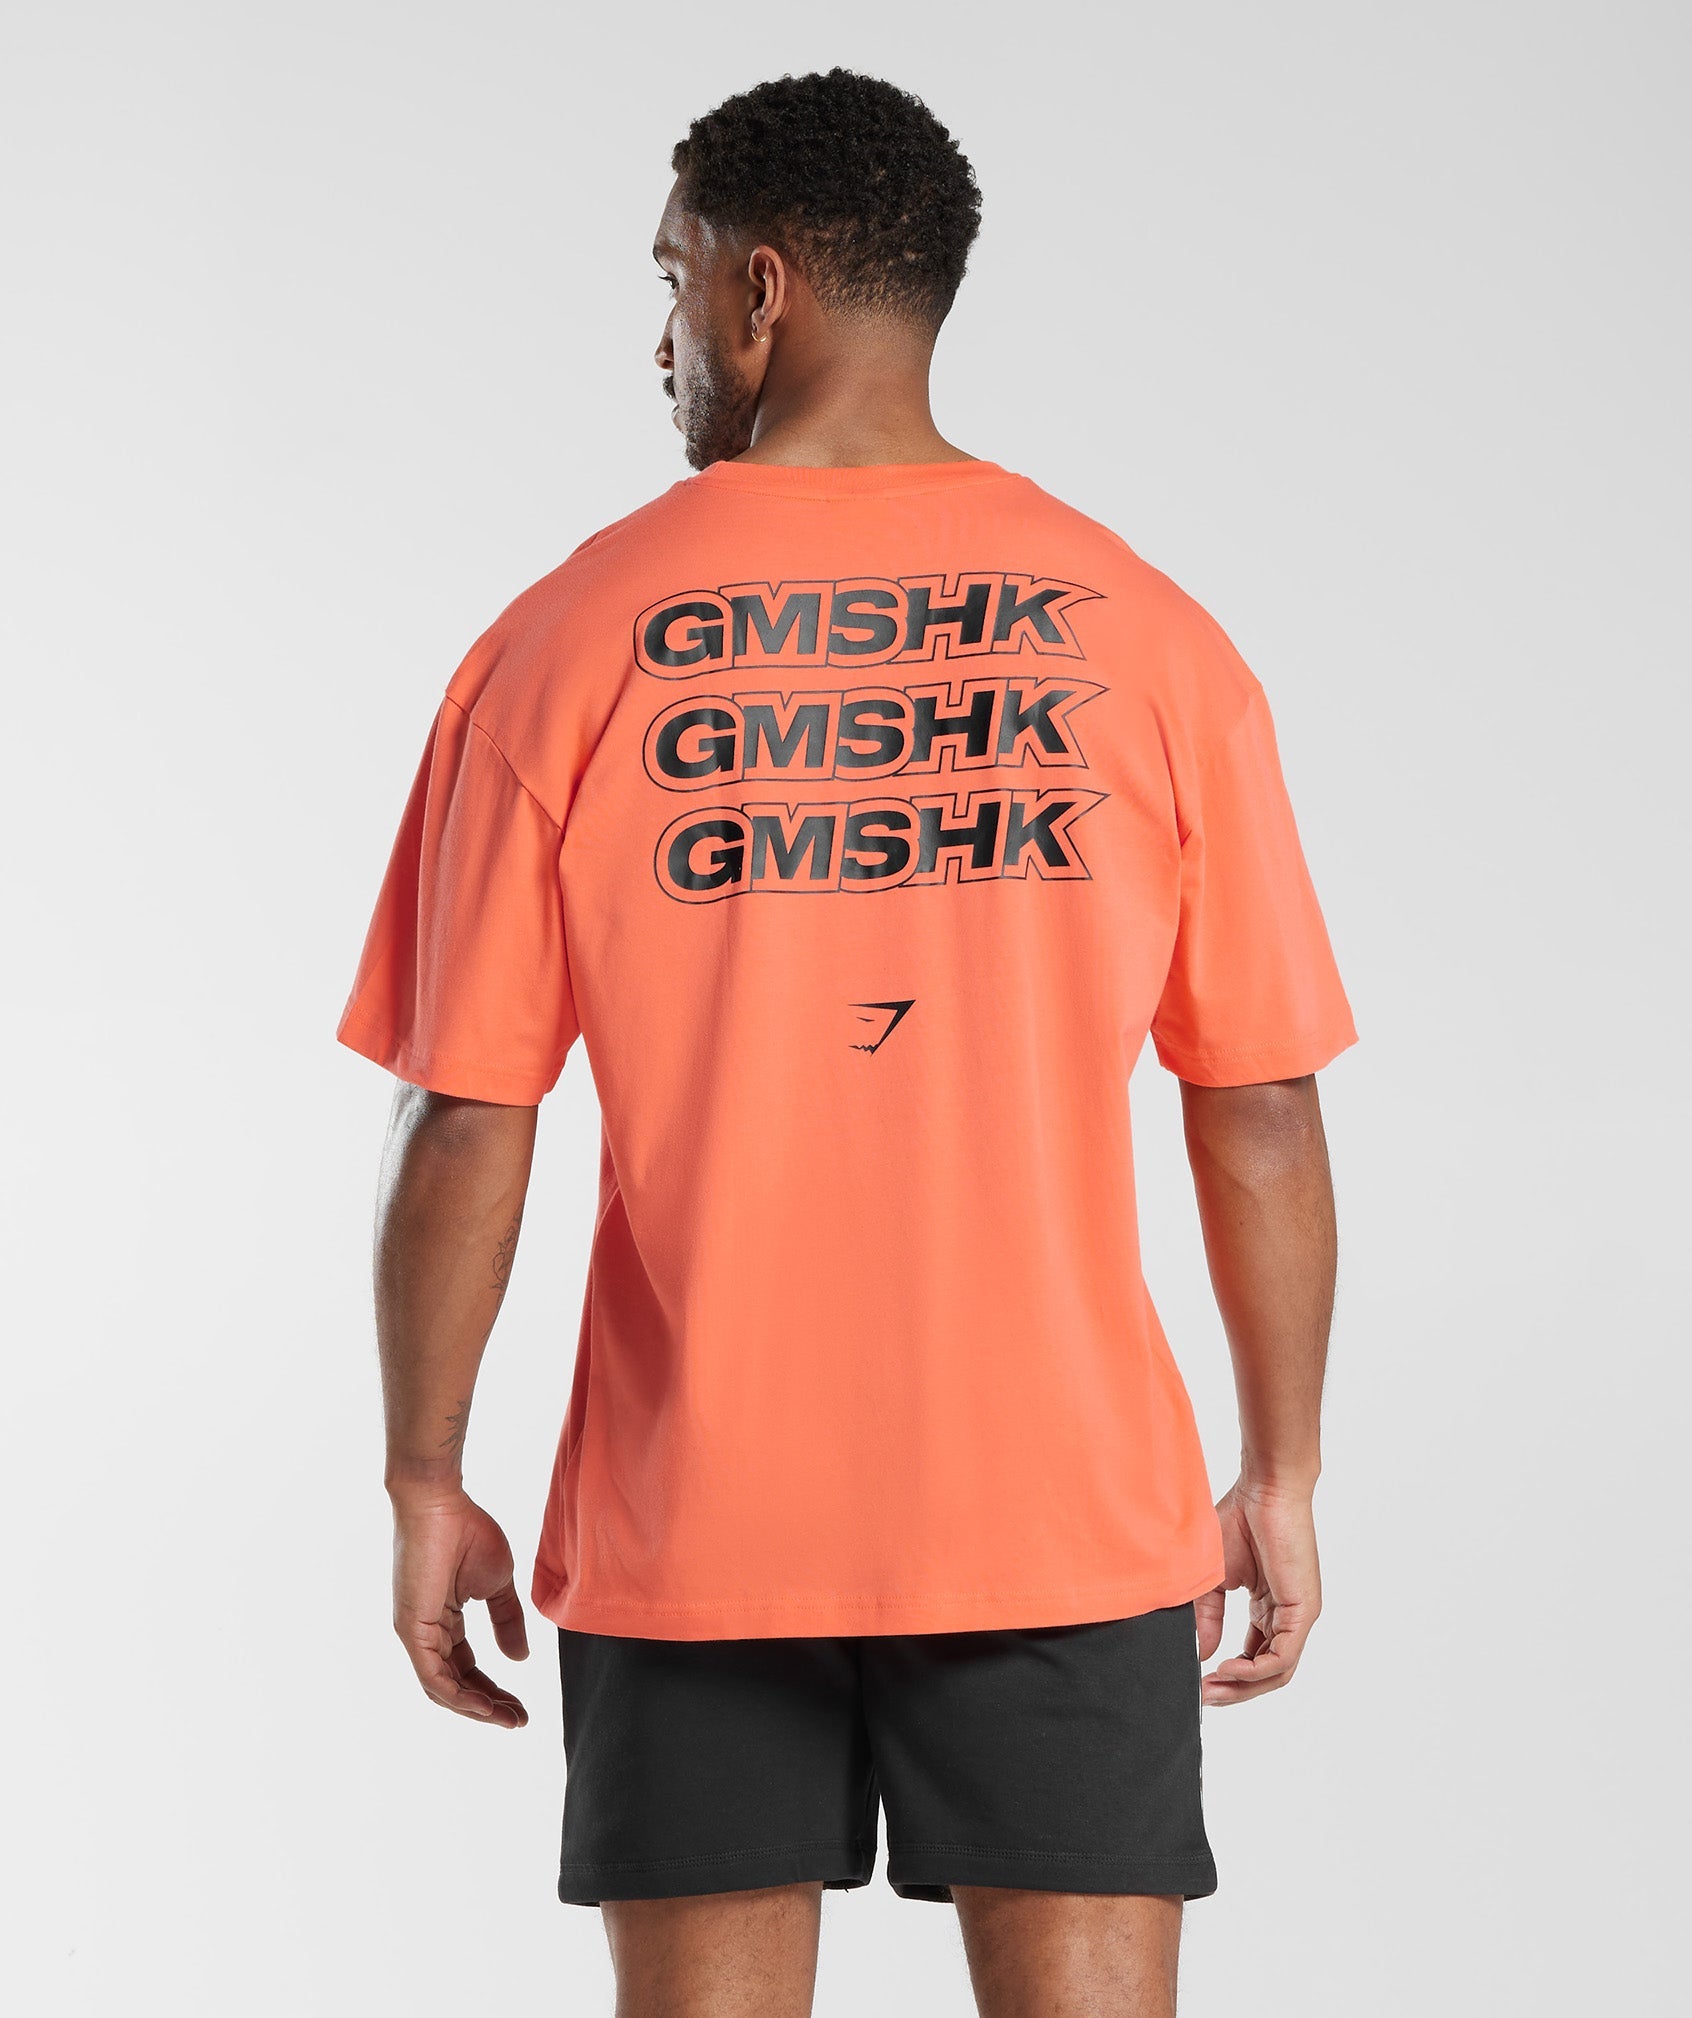 GMSHK Oversized T-Shirt in Solstice Orange - view 1